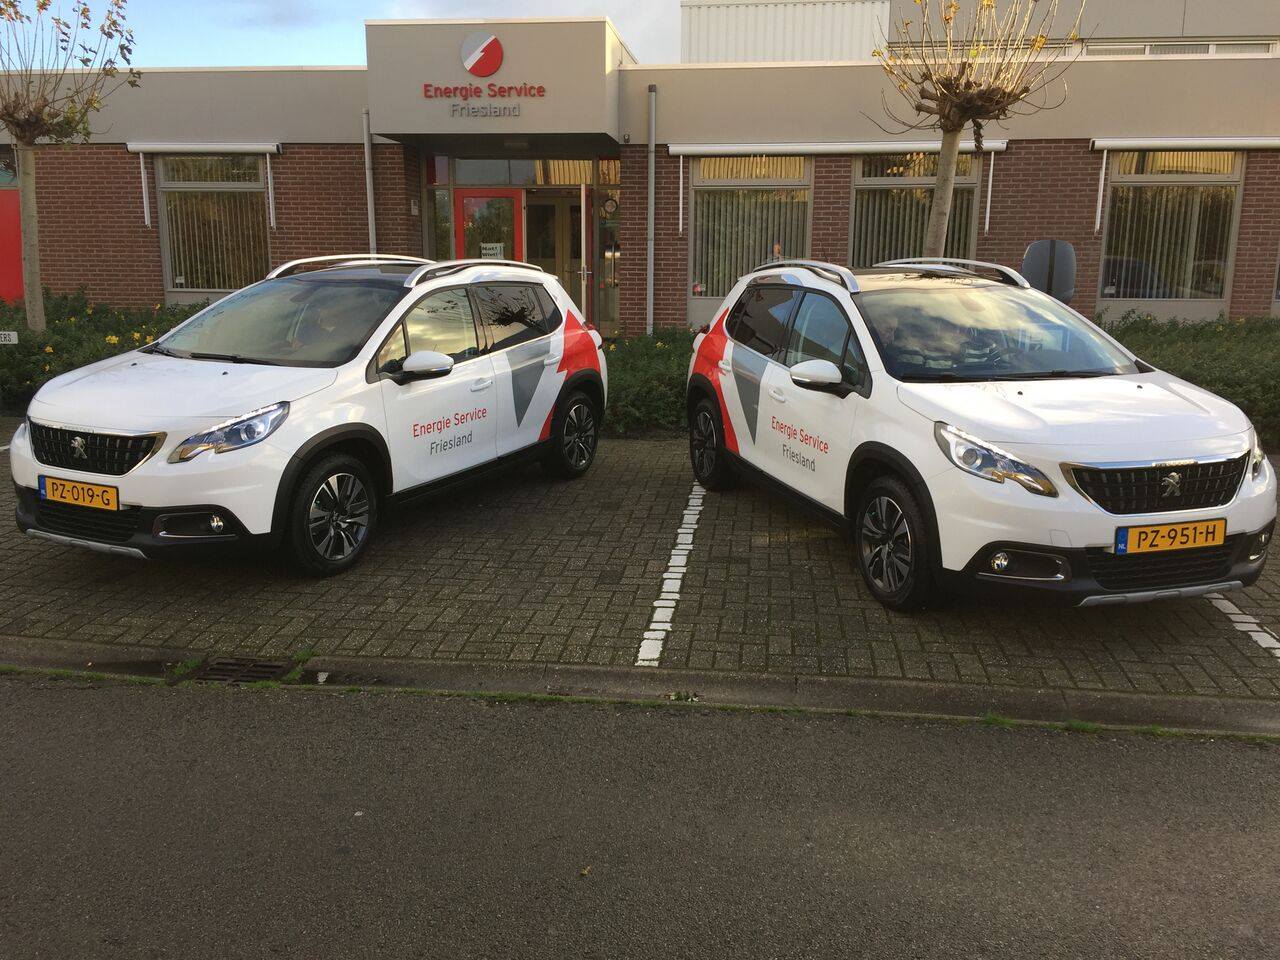 Energie Service Friesland